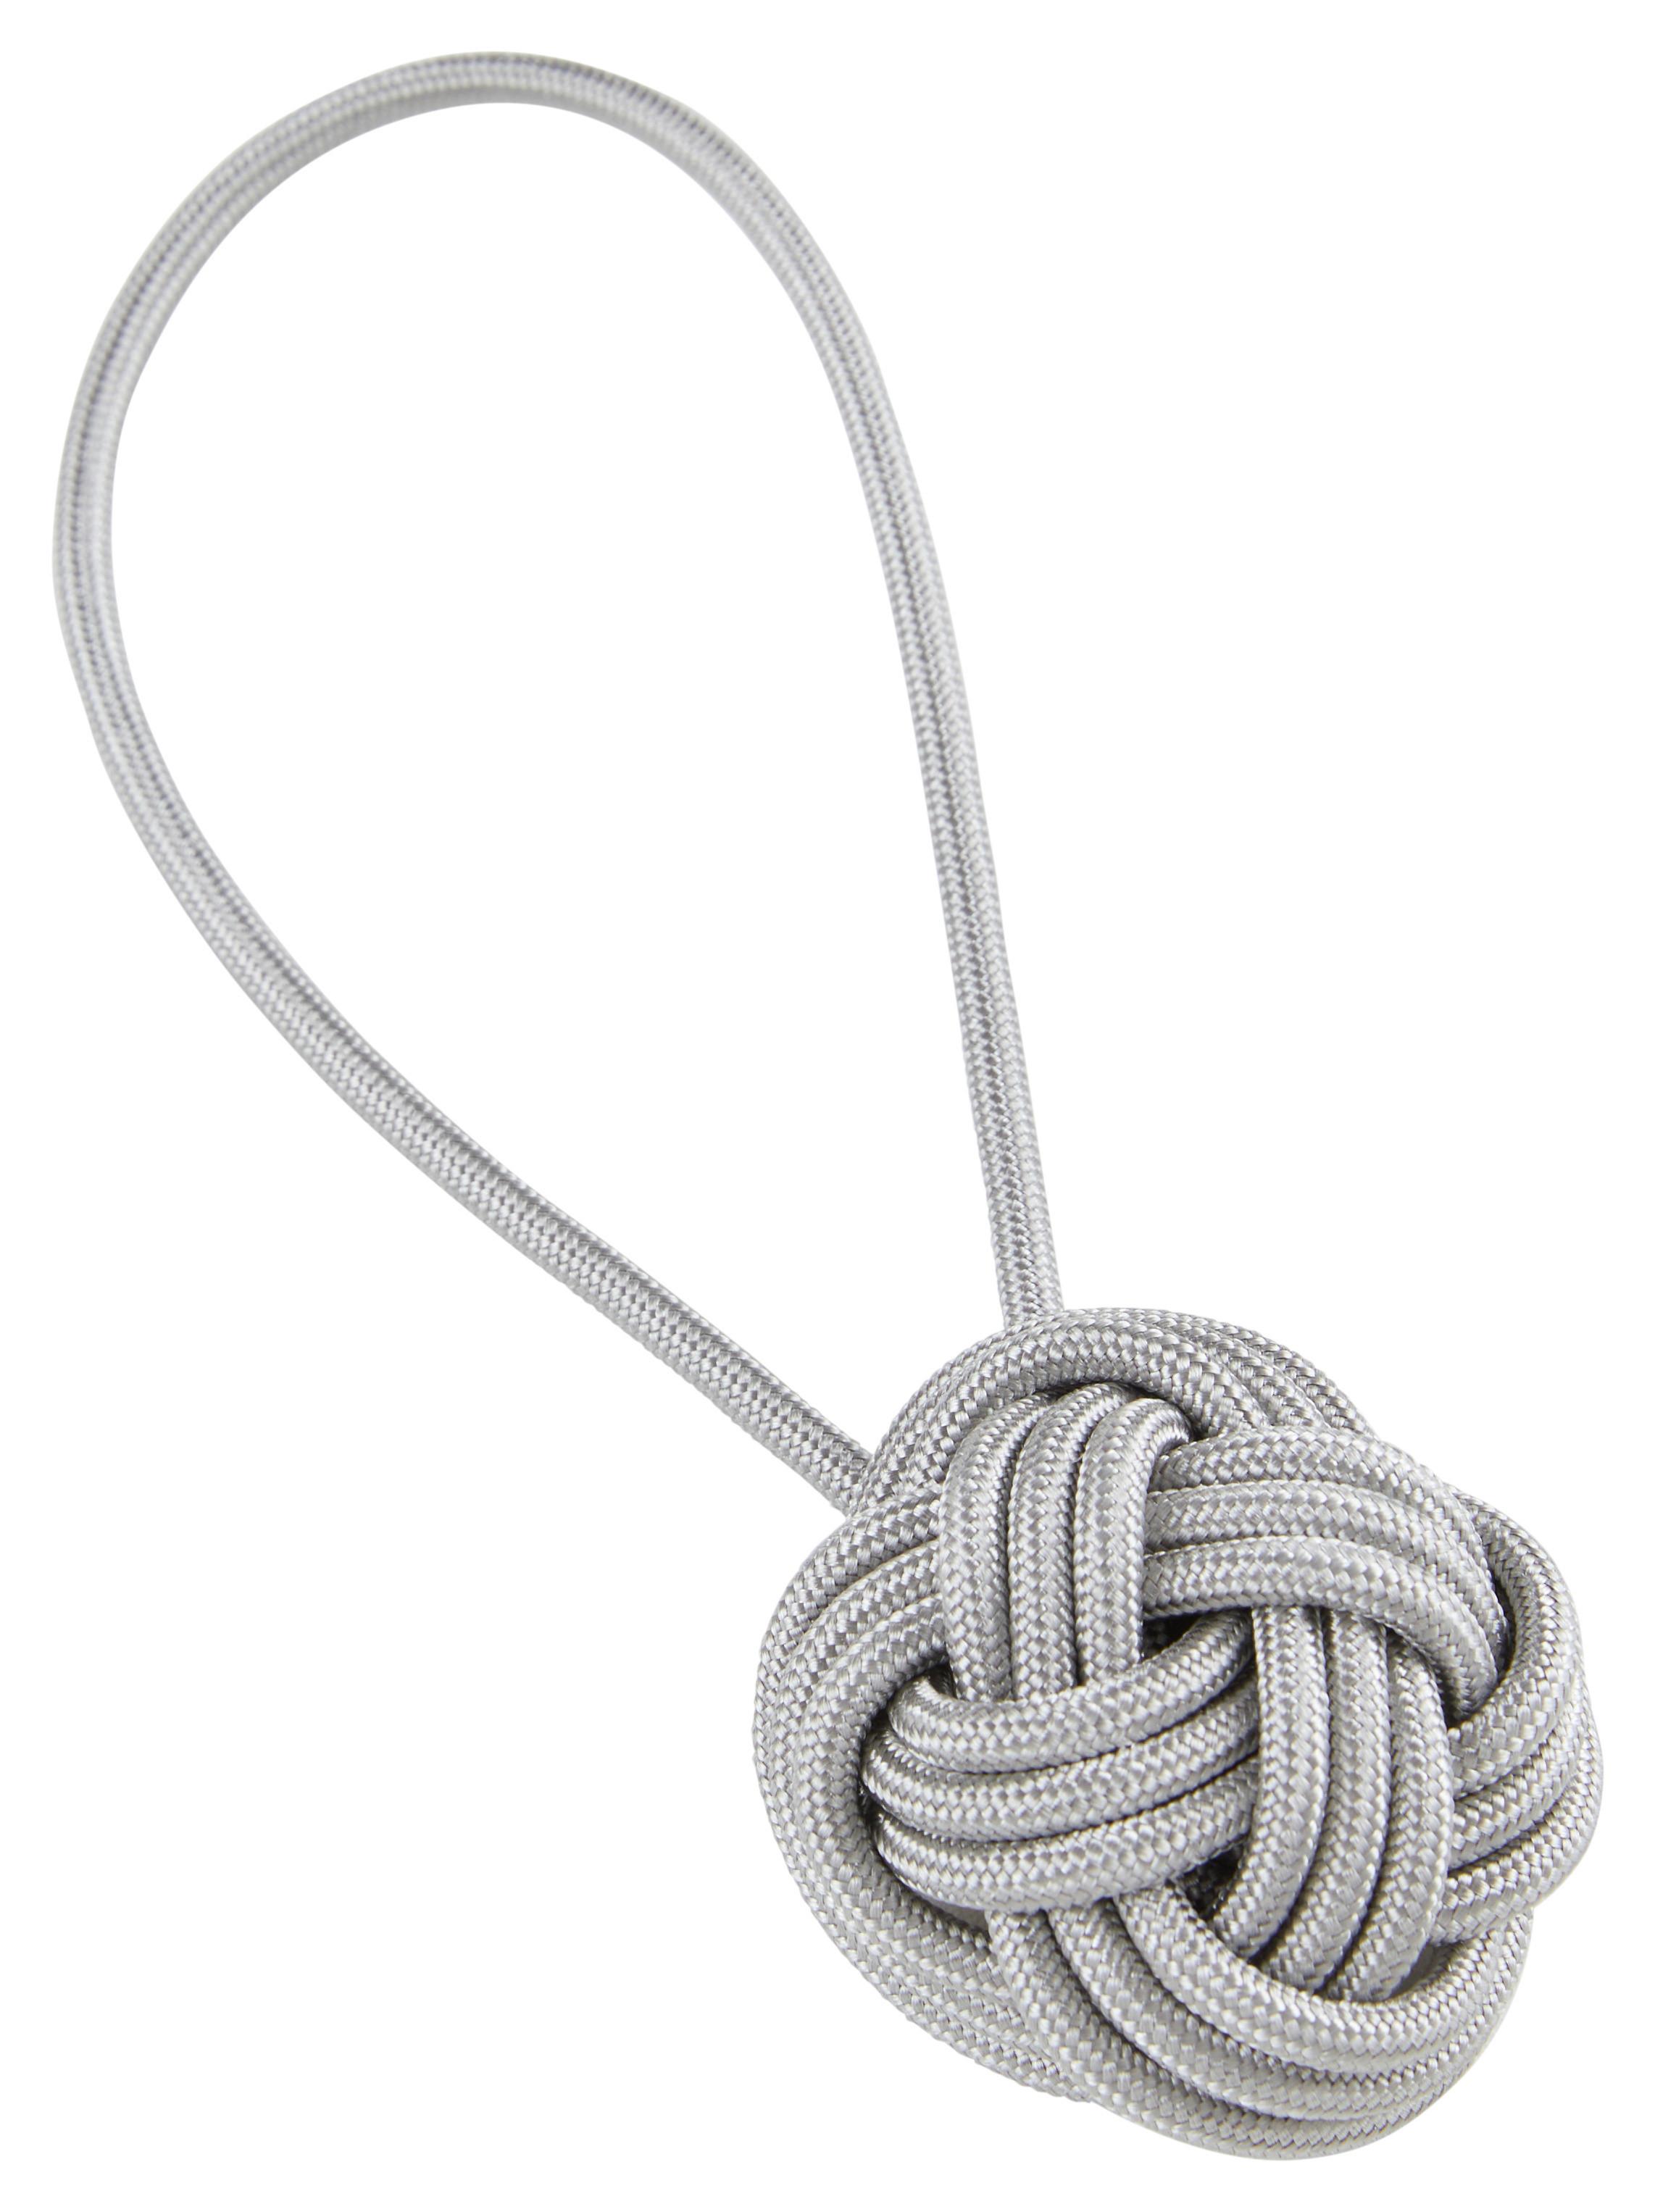 Raffhalter Knoten in Grau - Grau, Textil (5cm) - Modern Living